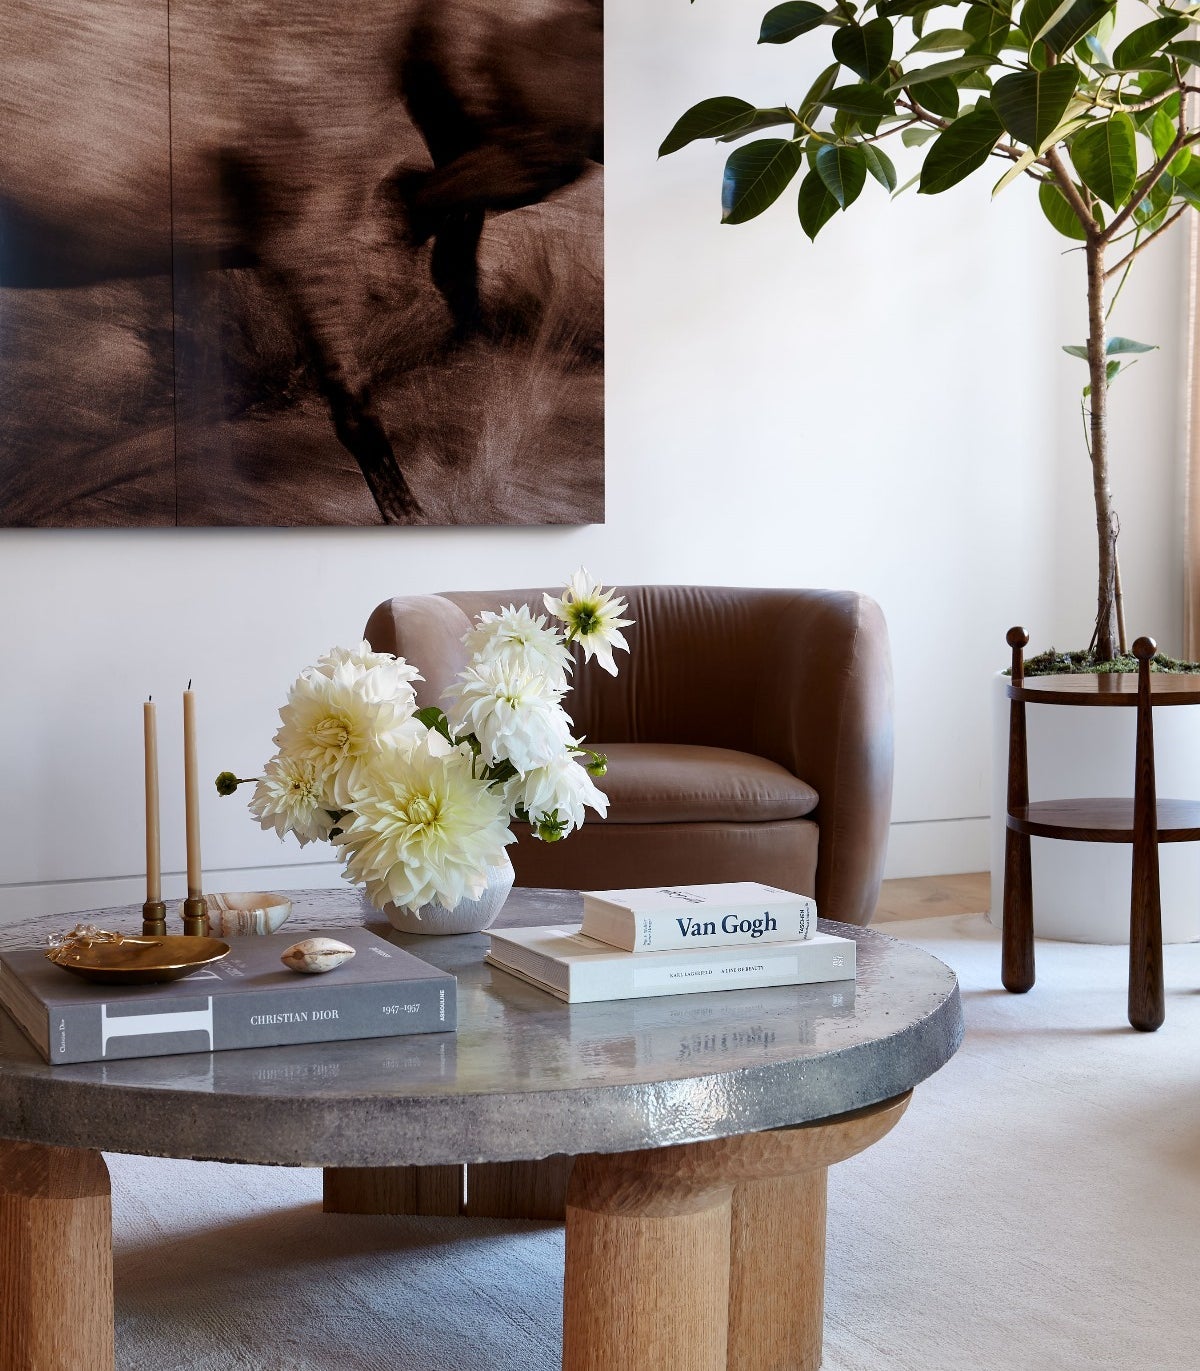 Louis Vuitton home decor  Home decor, Decor interior design, Master suite  decor